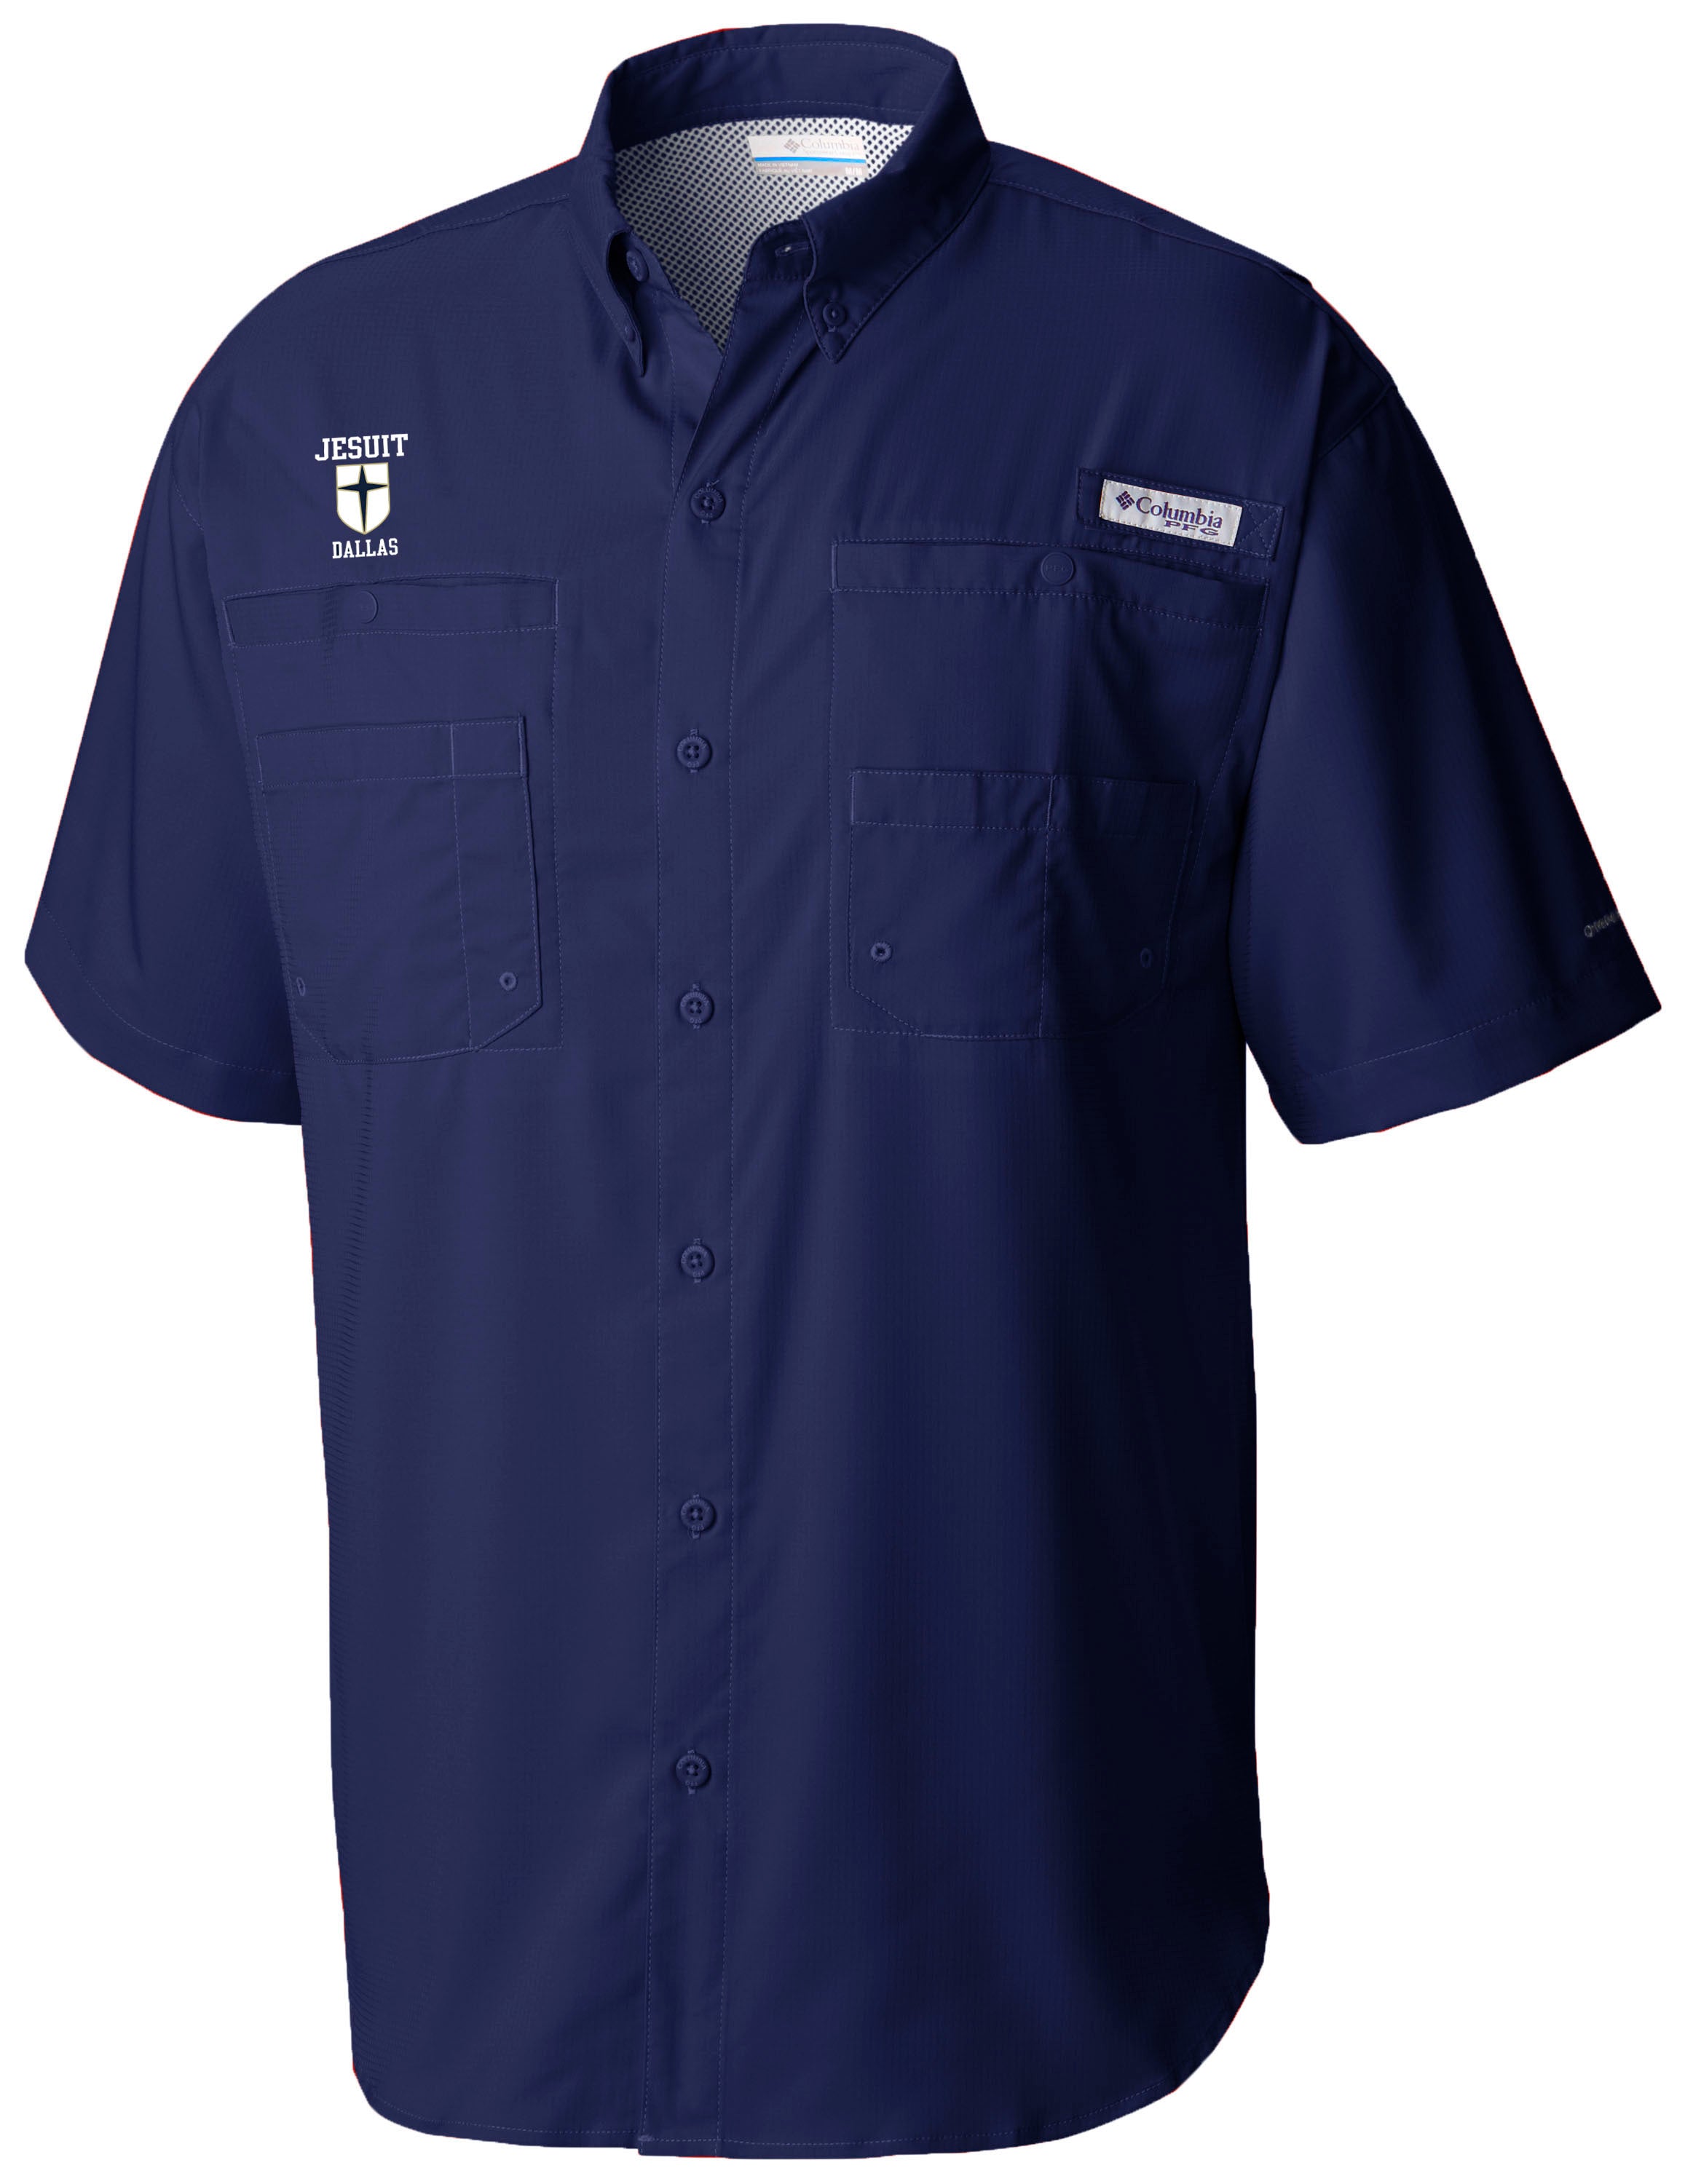 Blue Columbia fishing shirt - Tops